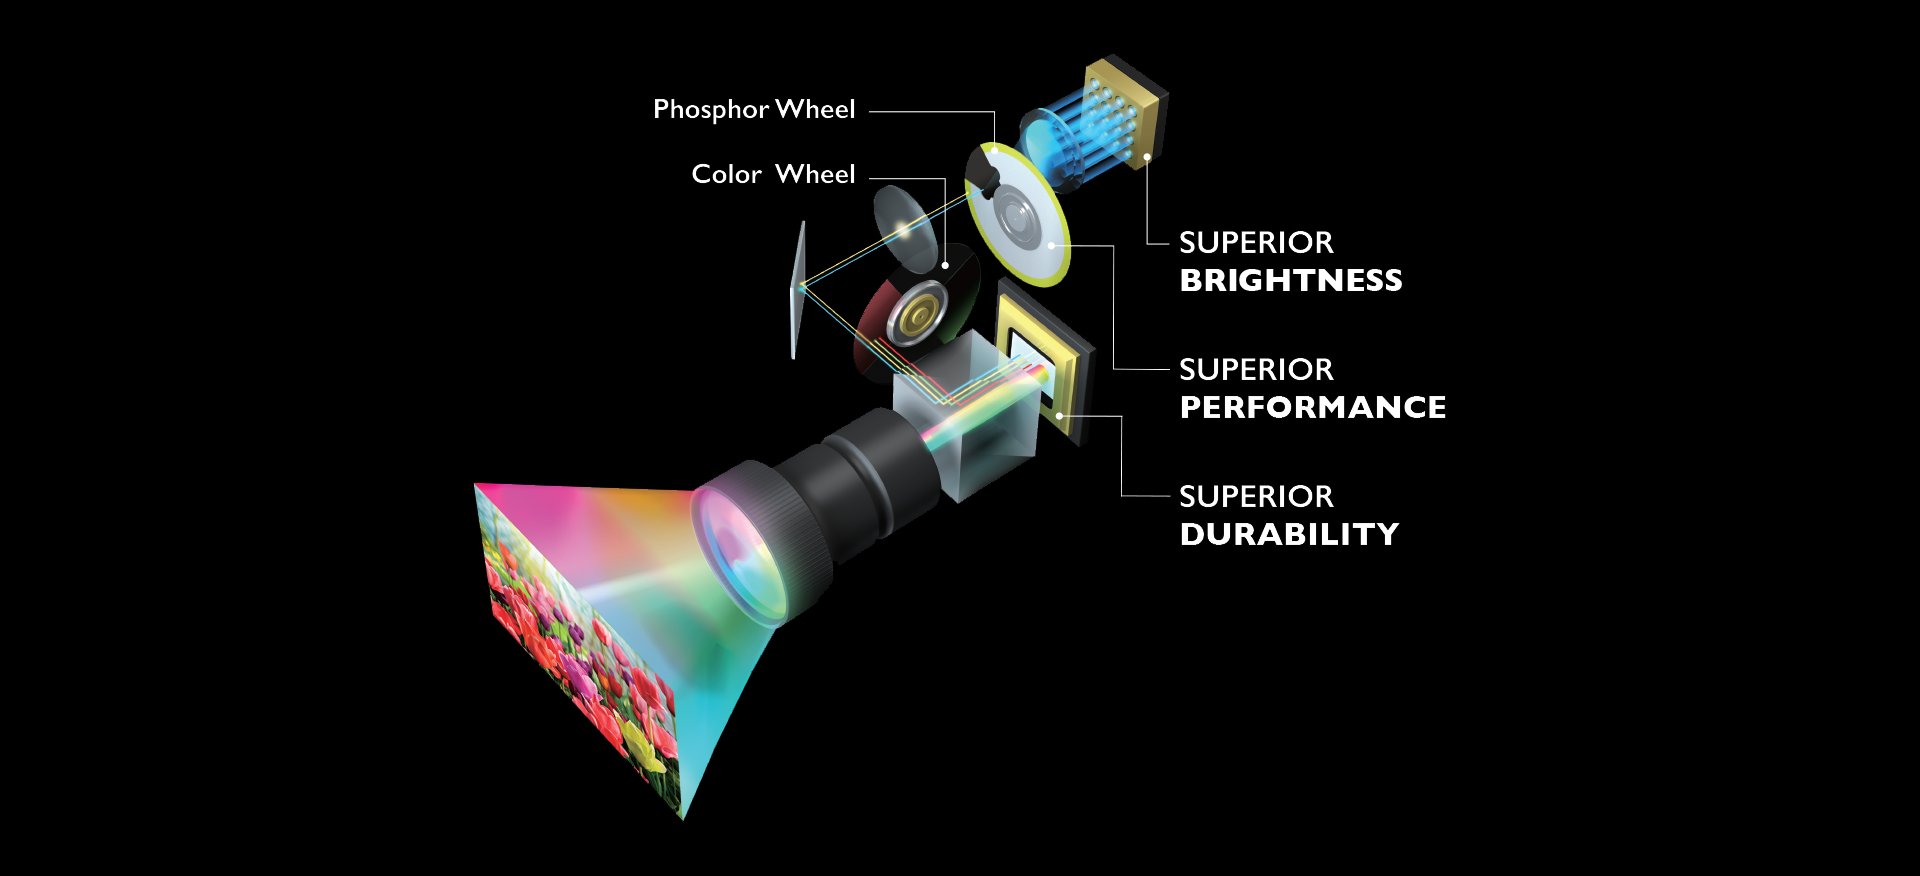 BenQ LU951 WUXGA Bluecore Laser projector gives you superior brightness, performance, and durability.